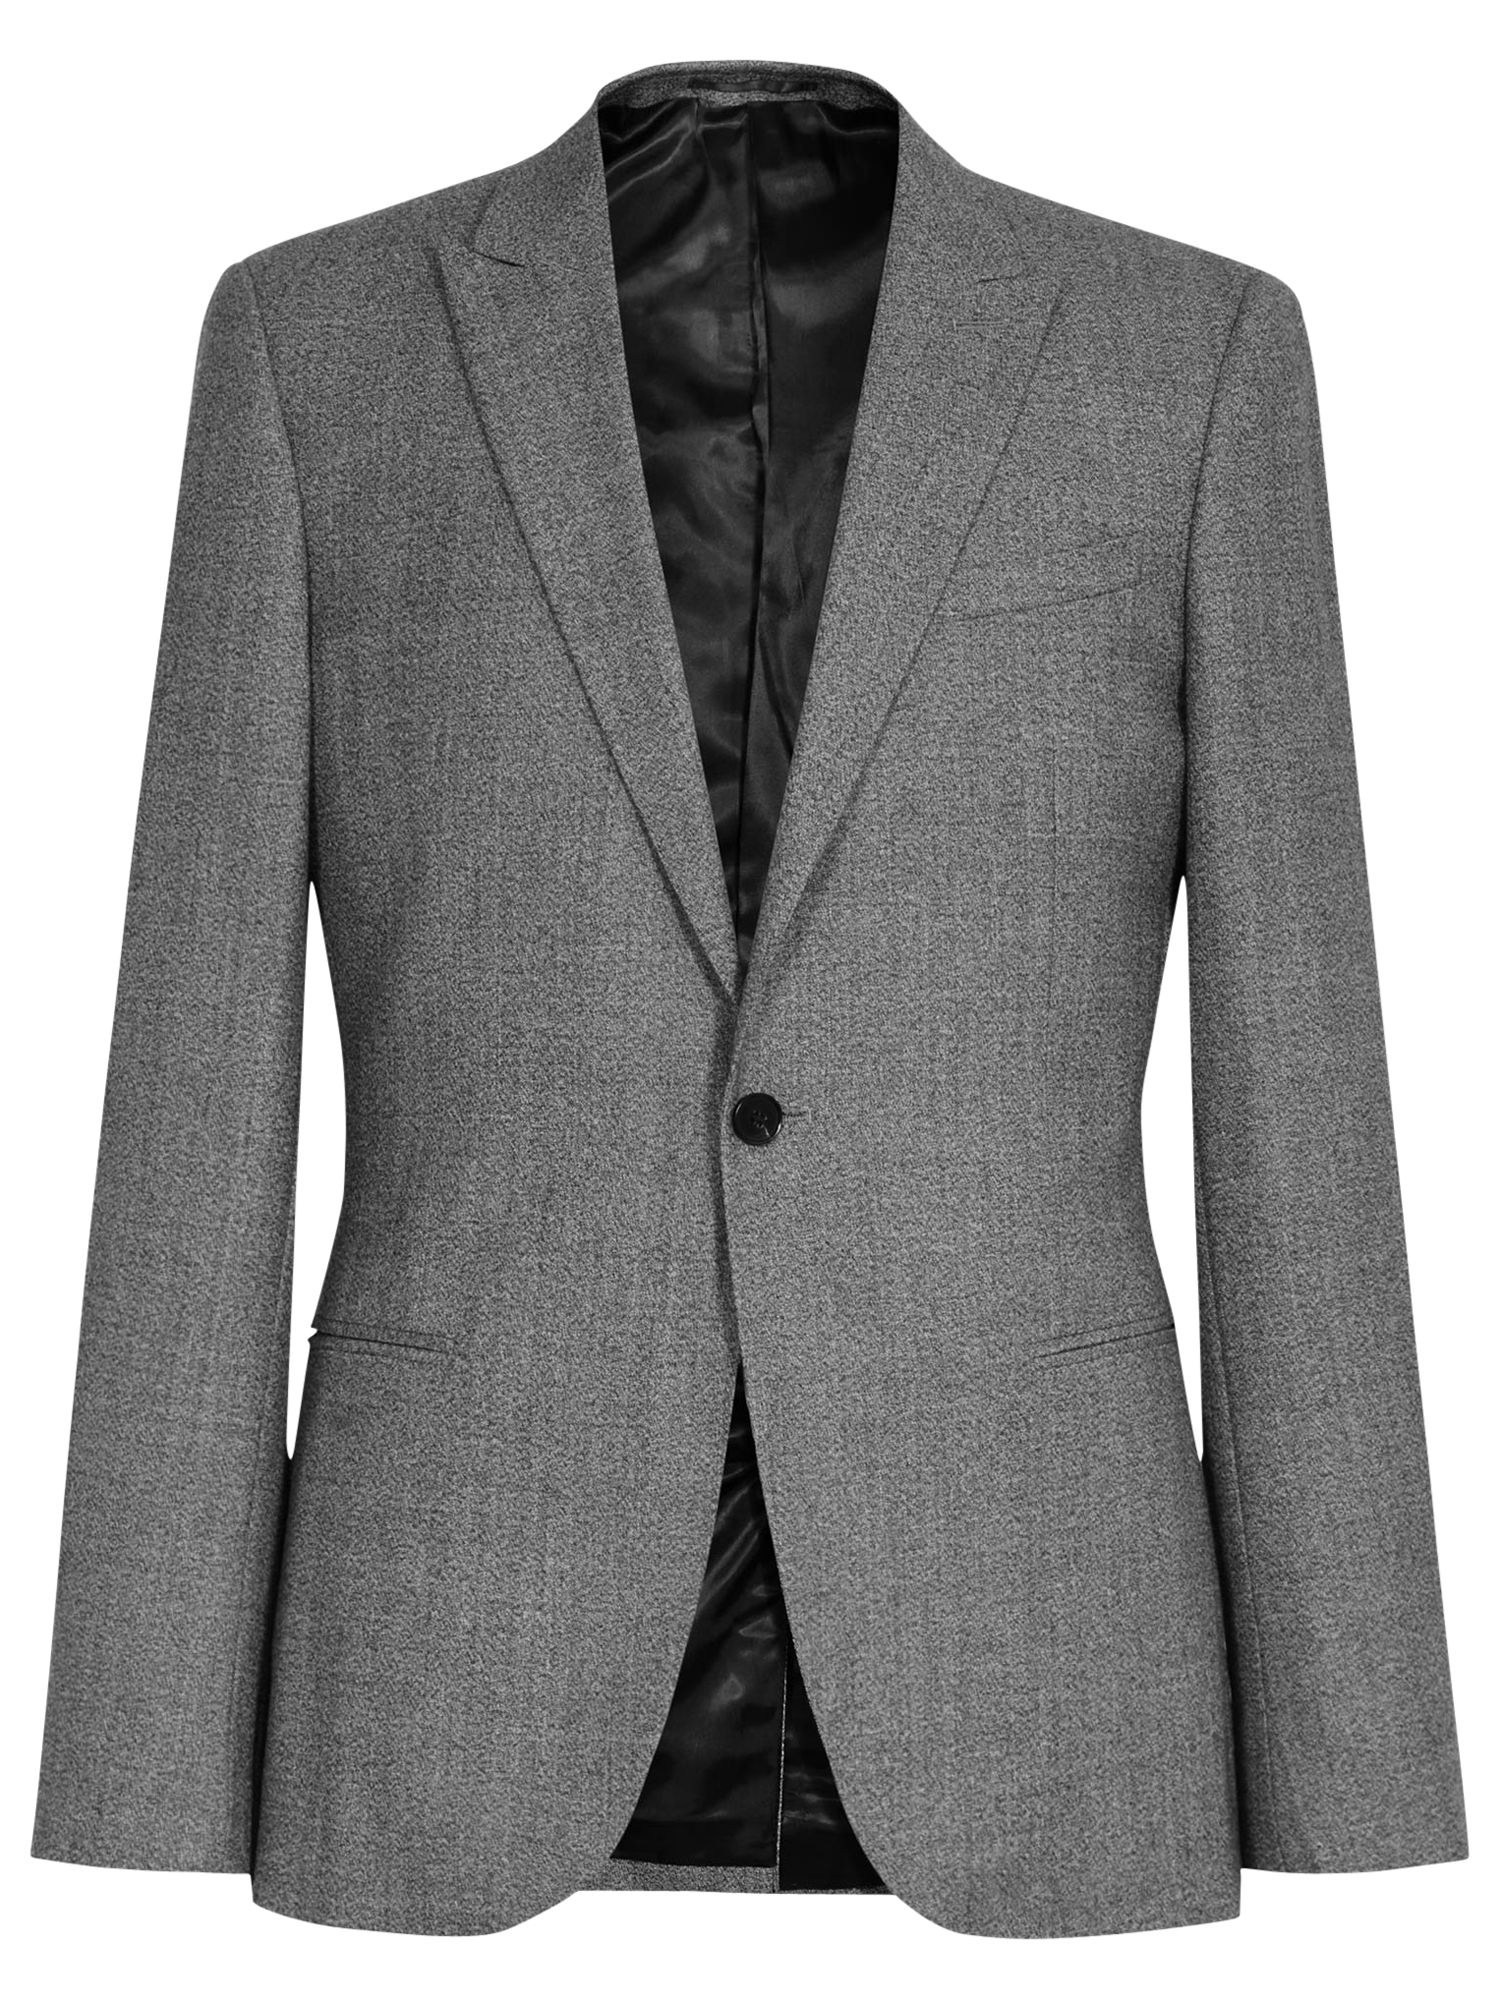 Reiss Delliston Wool Mix Slim Suit Jacket, Light Grey